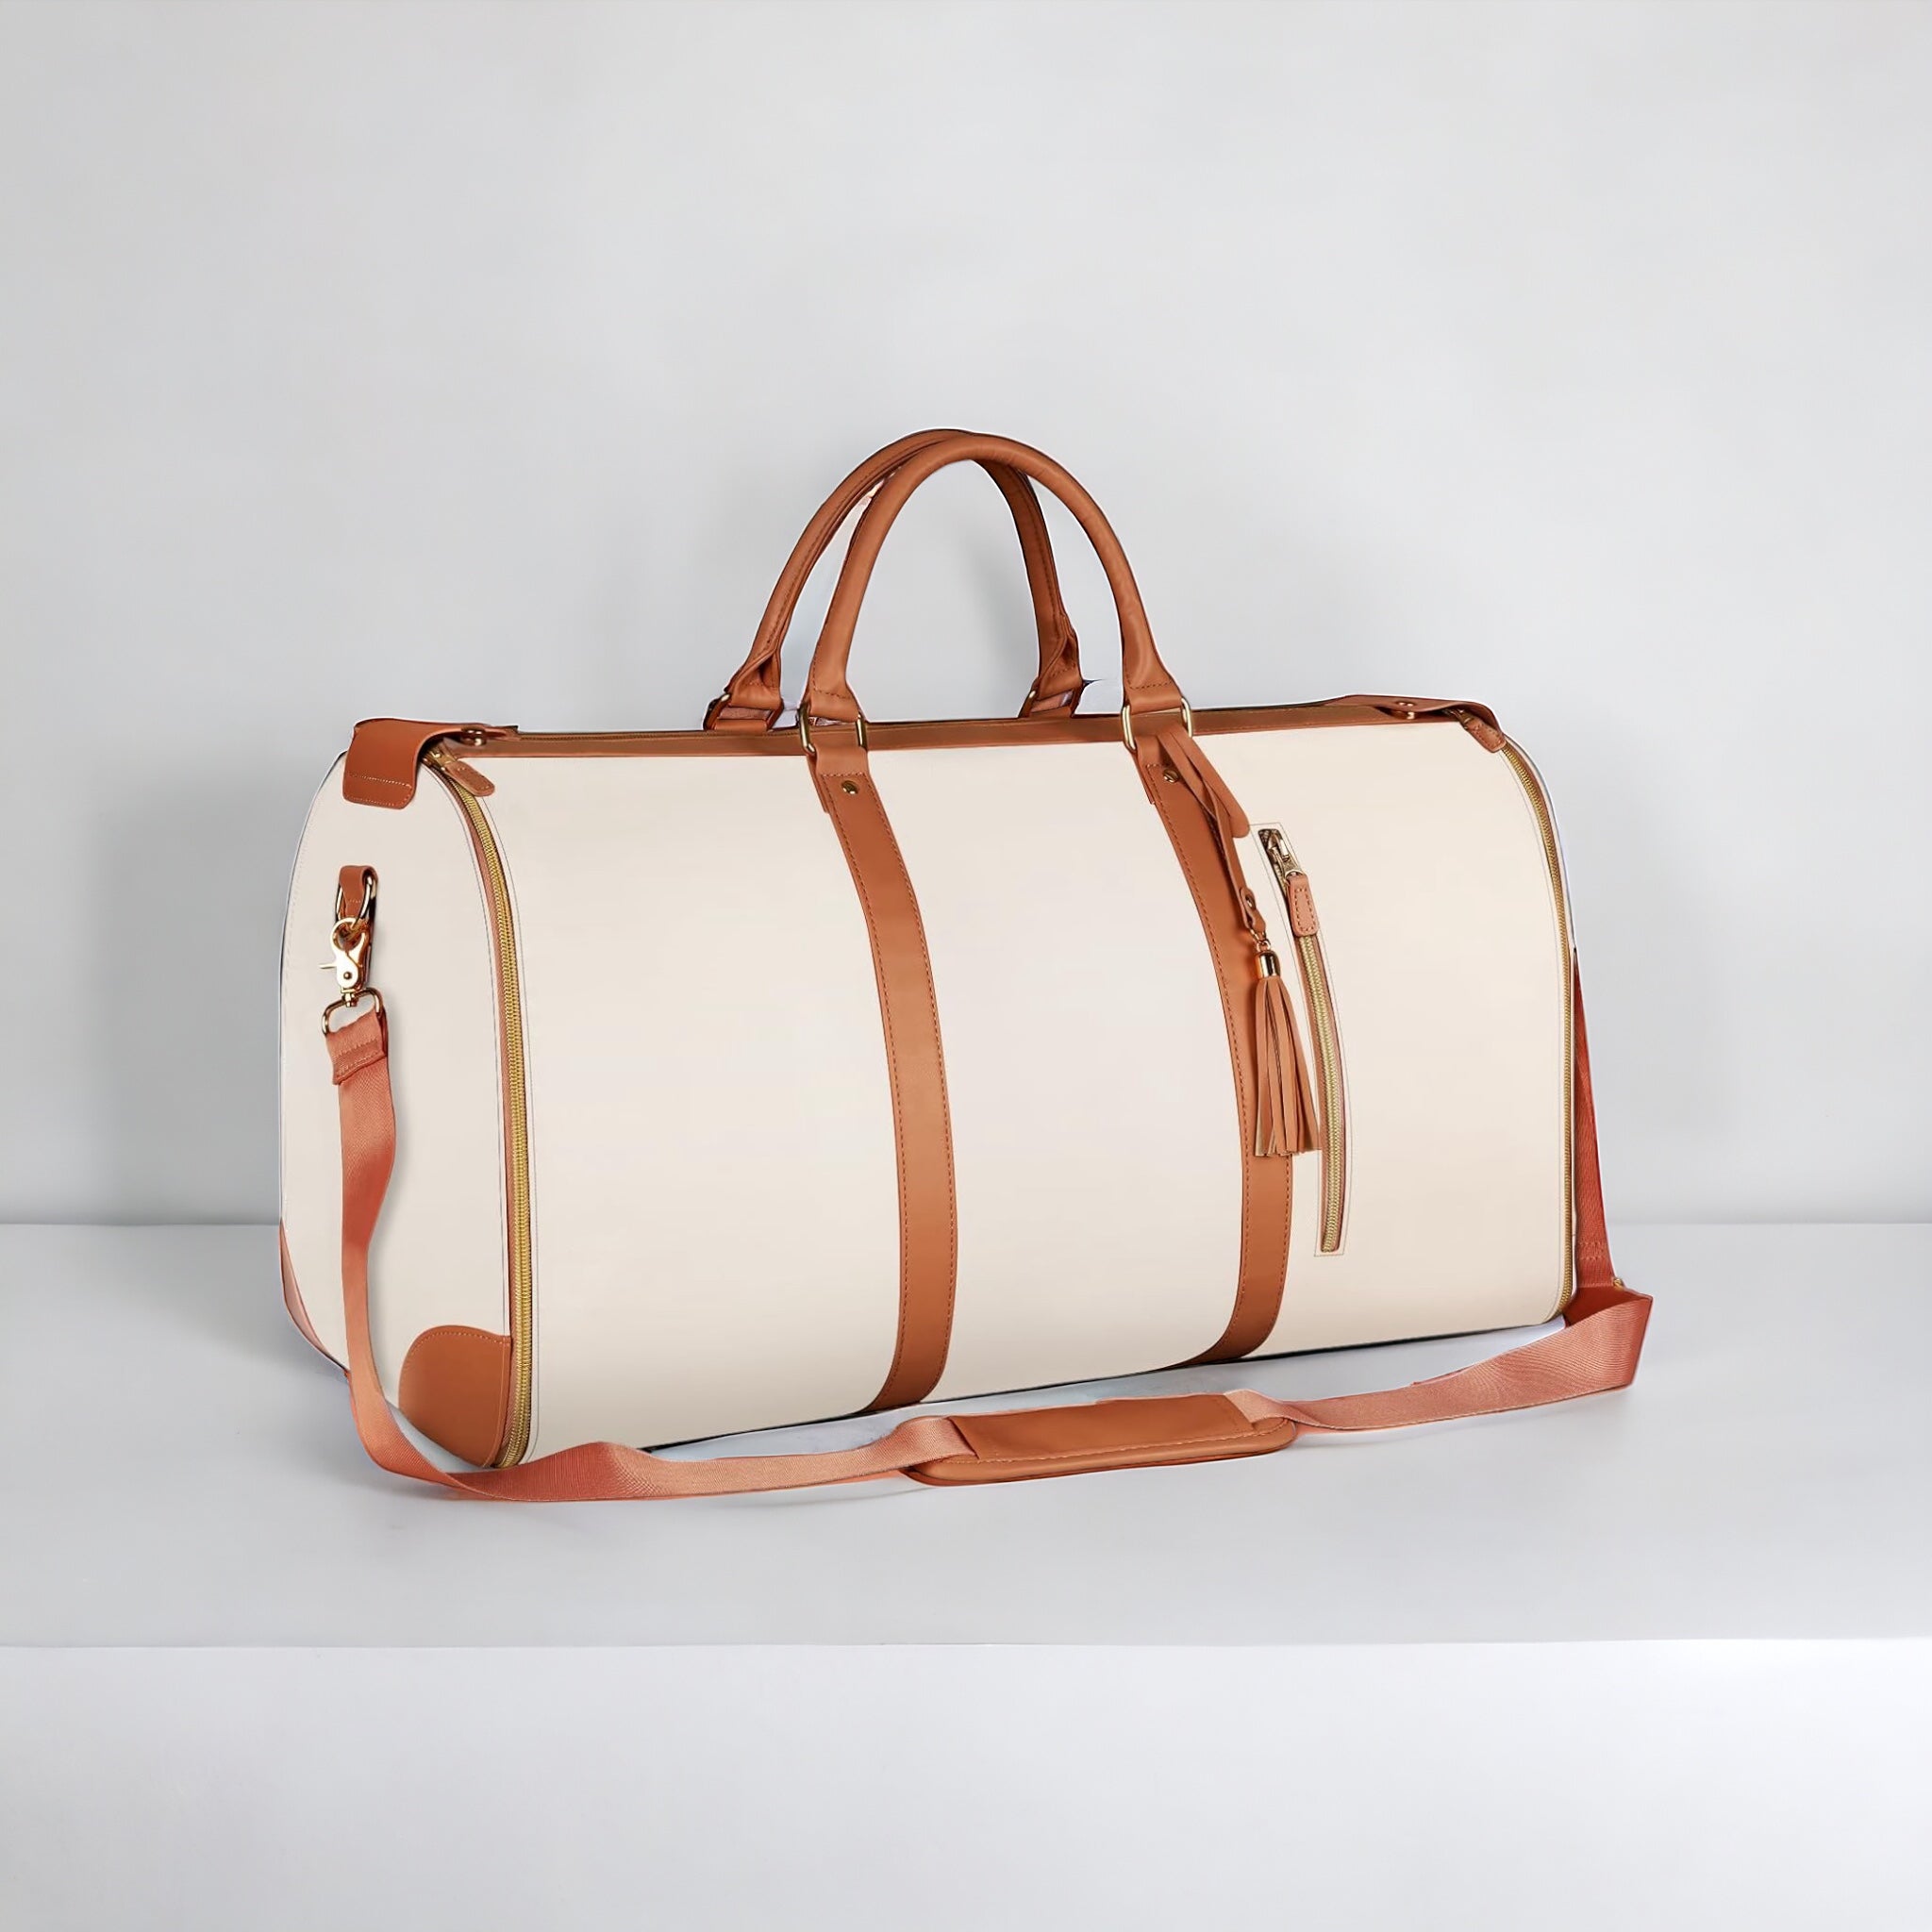 Luxury bag-variant luggage bag